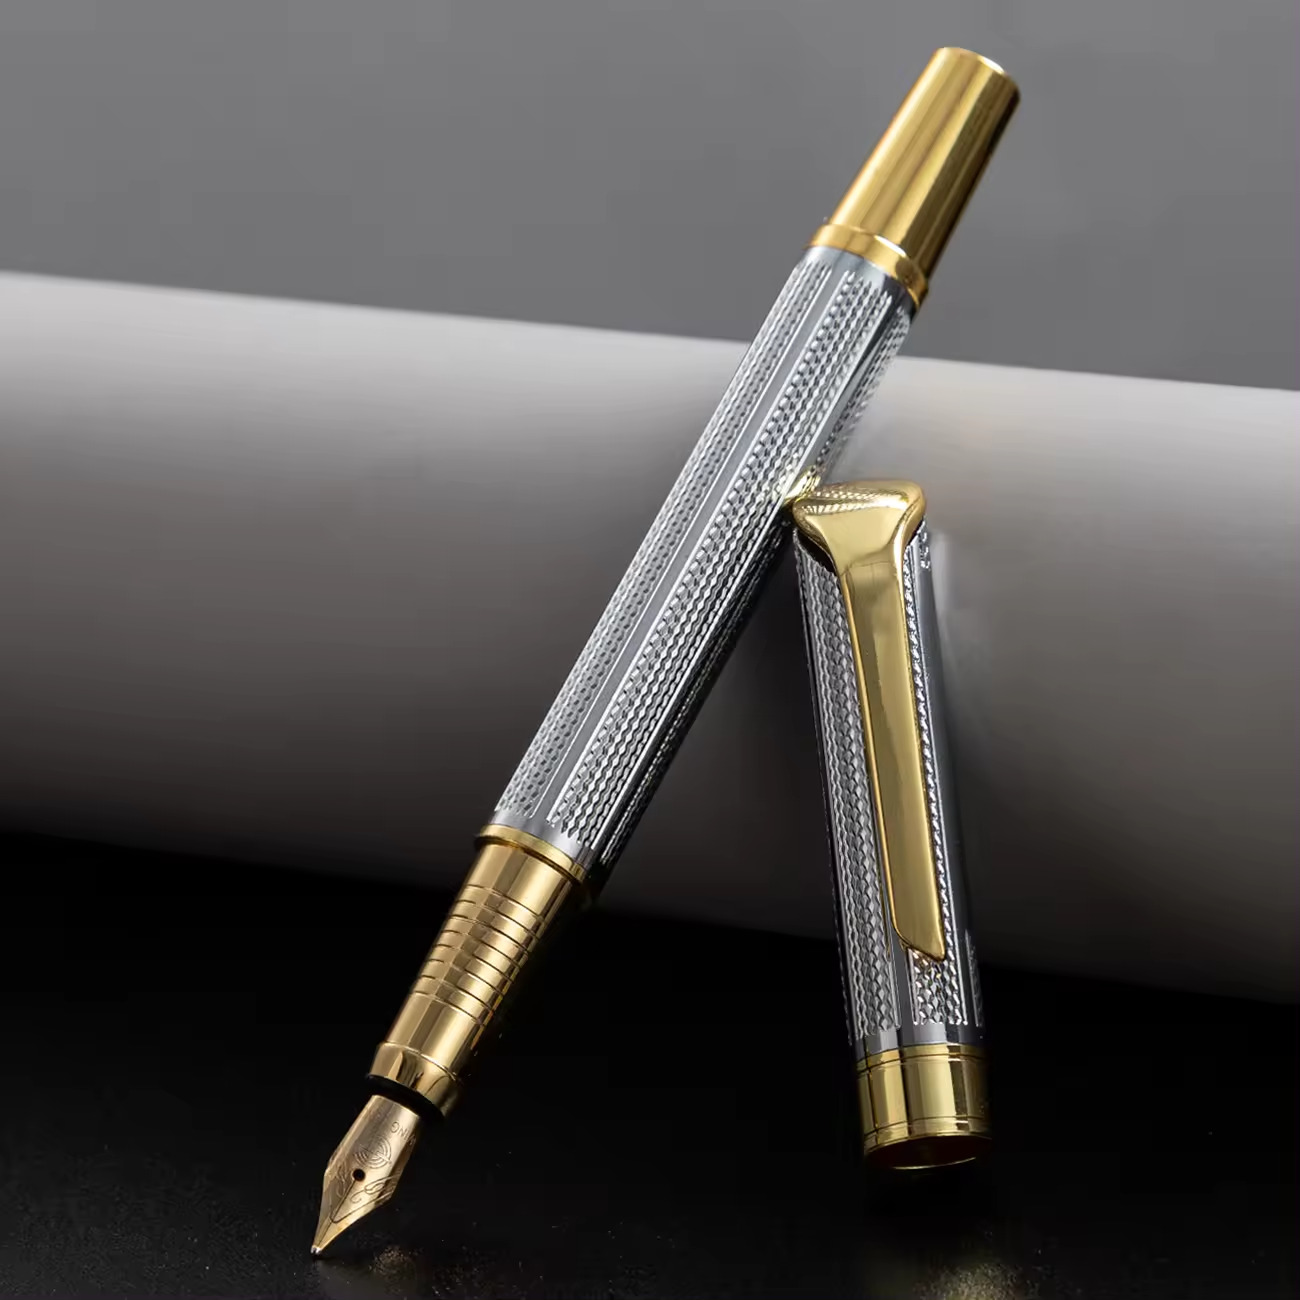 Jinhao 899 Reticulated Metal Fountain Pen, Fine Nib, Converter, Chrome & Gold